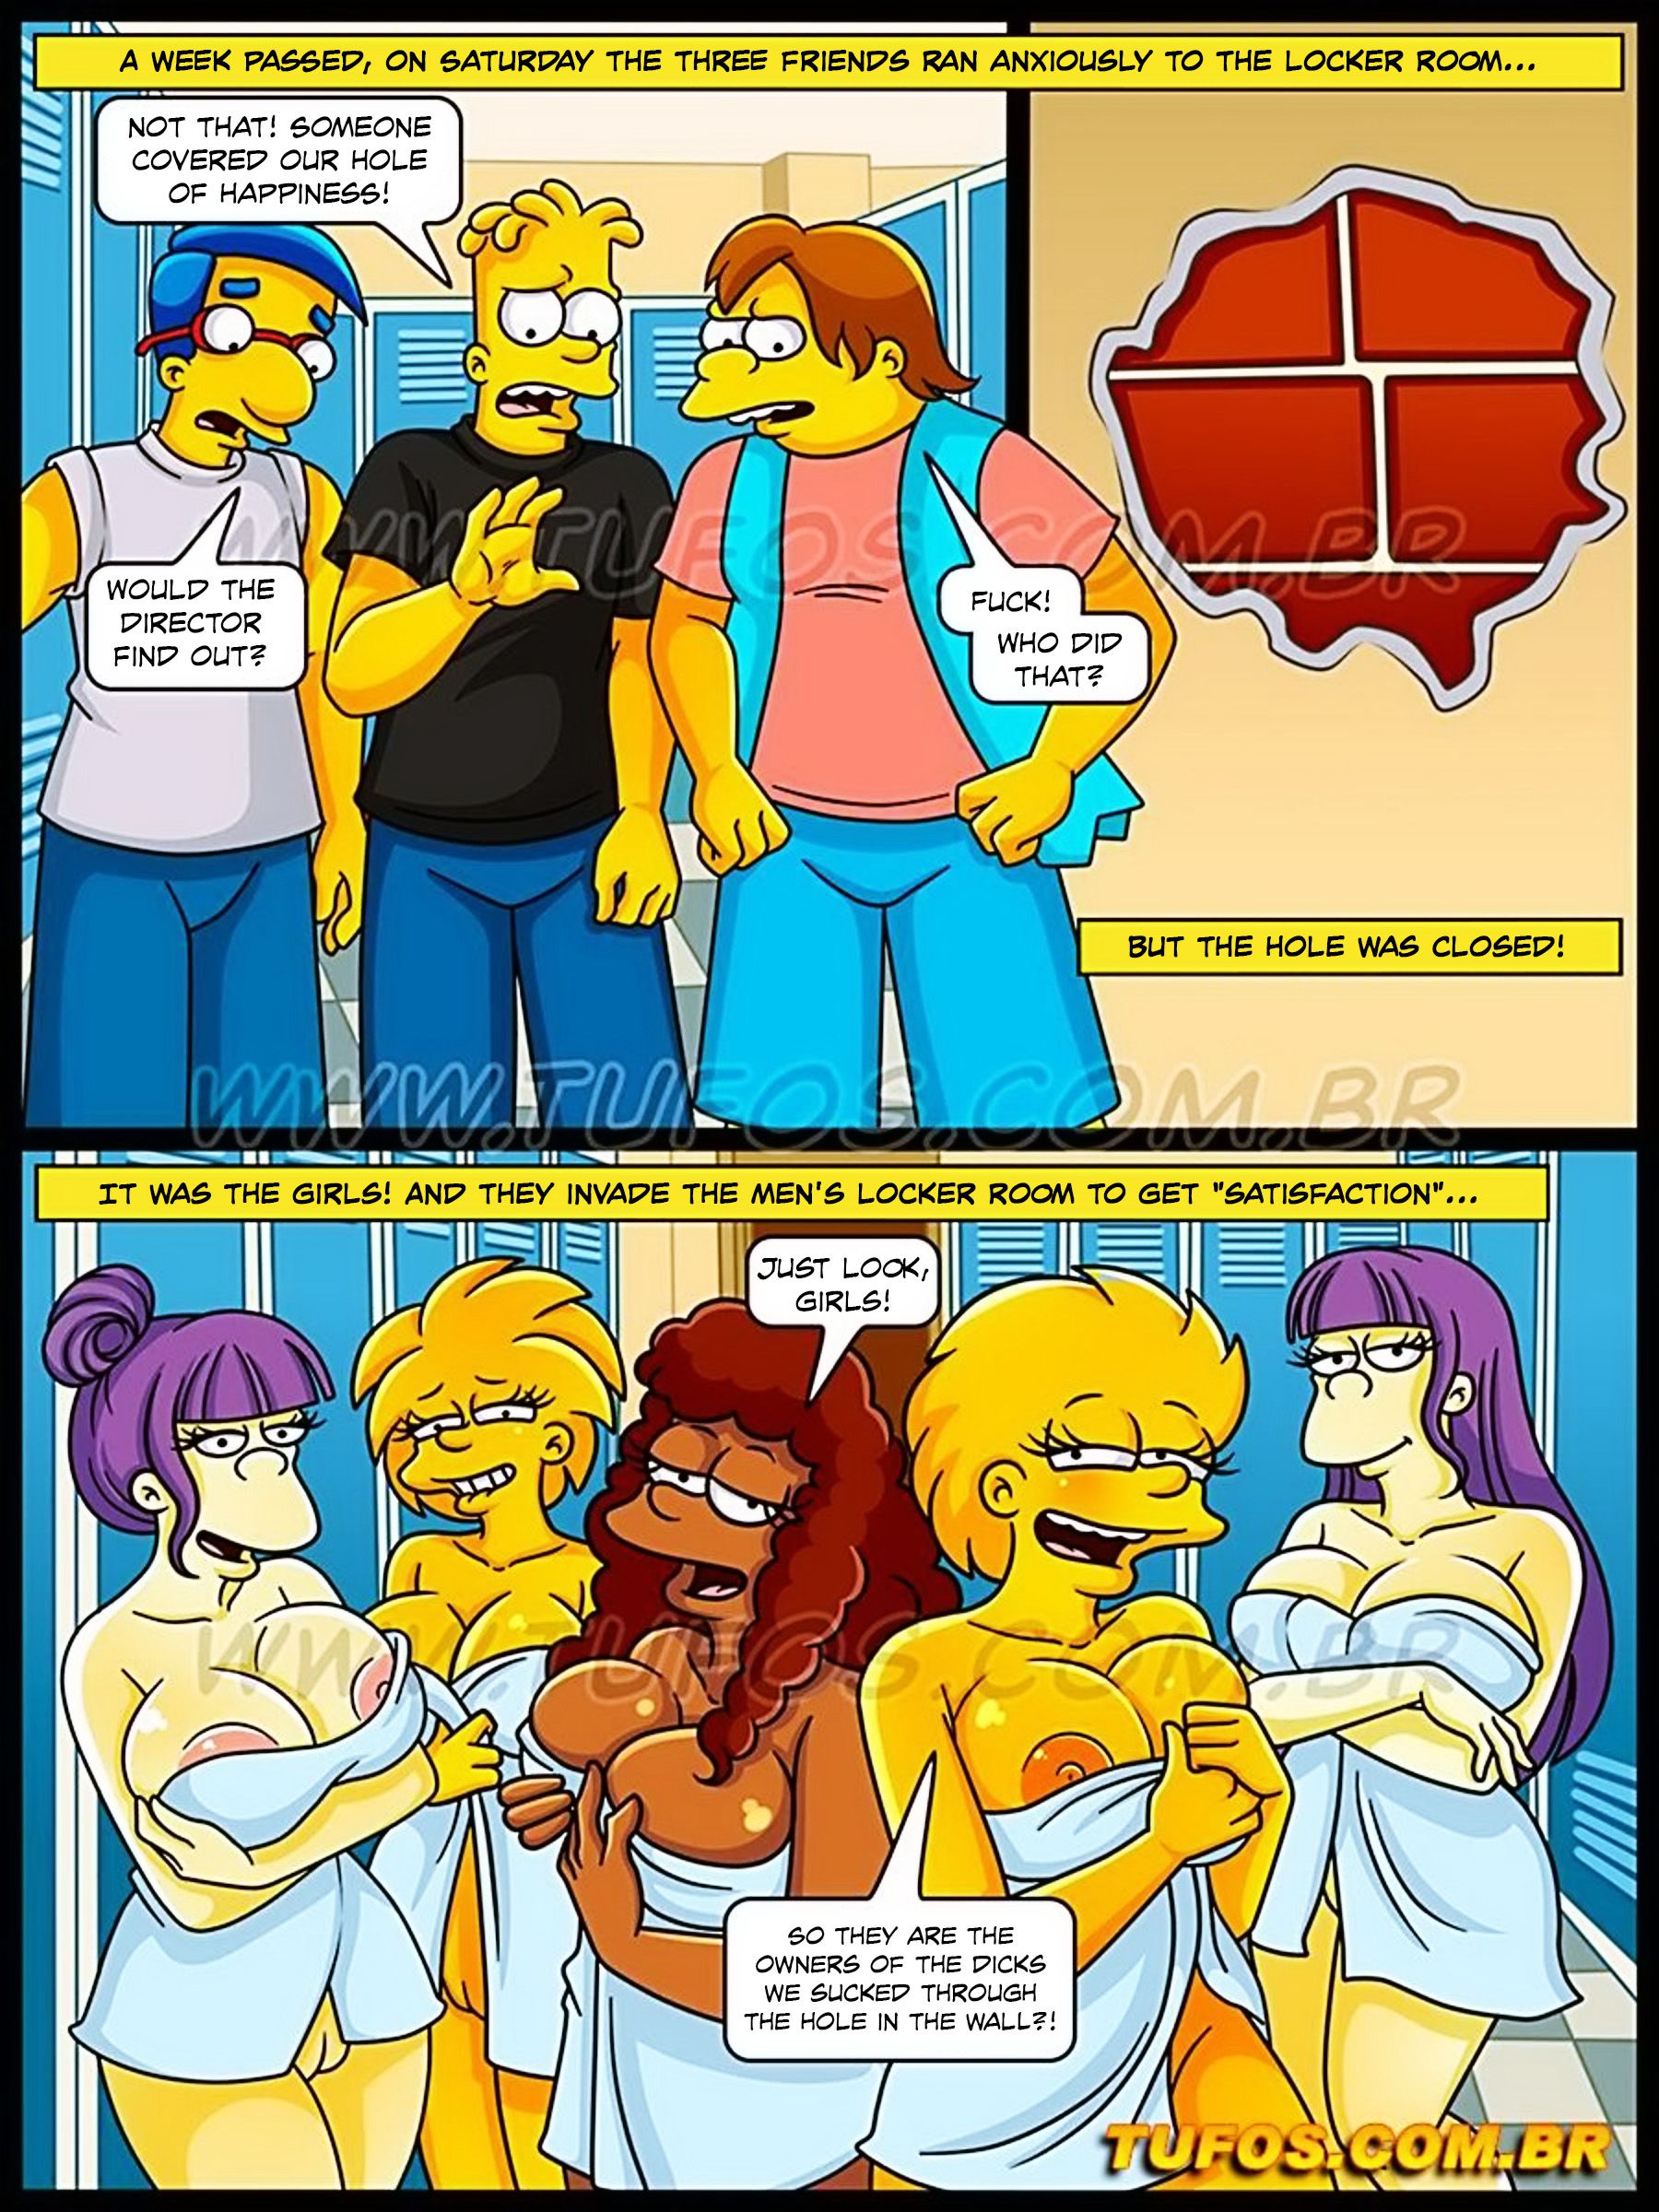 https://gedecomix.com/static/WP-manga/data/manga_6676c4a22e9b0/960abf364edfd30899faf45c0199818d/The-Simpsons-52--Women's-Locker-Room-(10).jpg